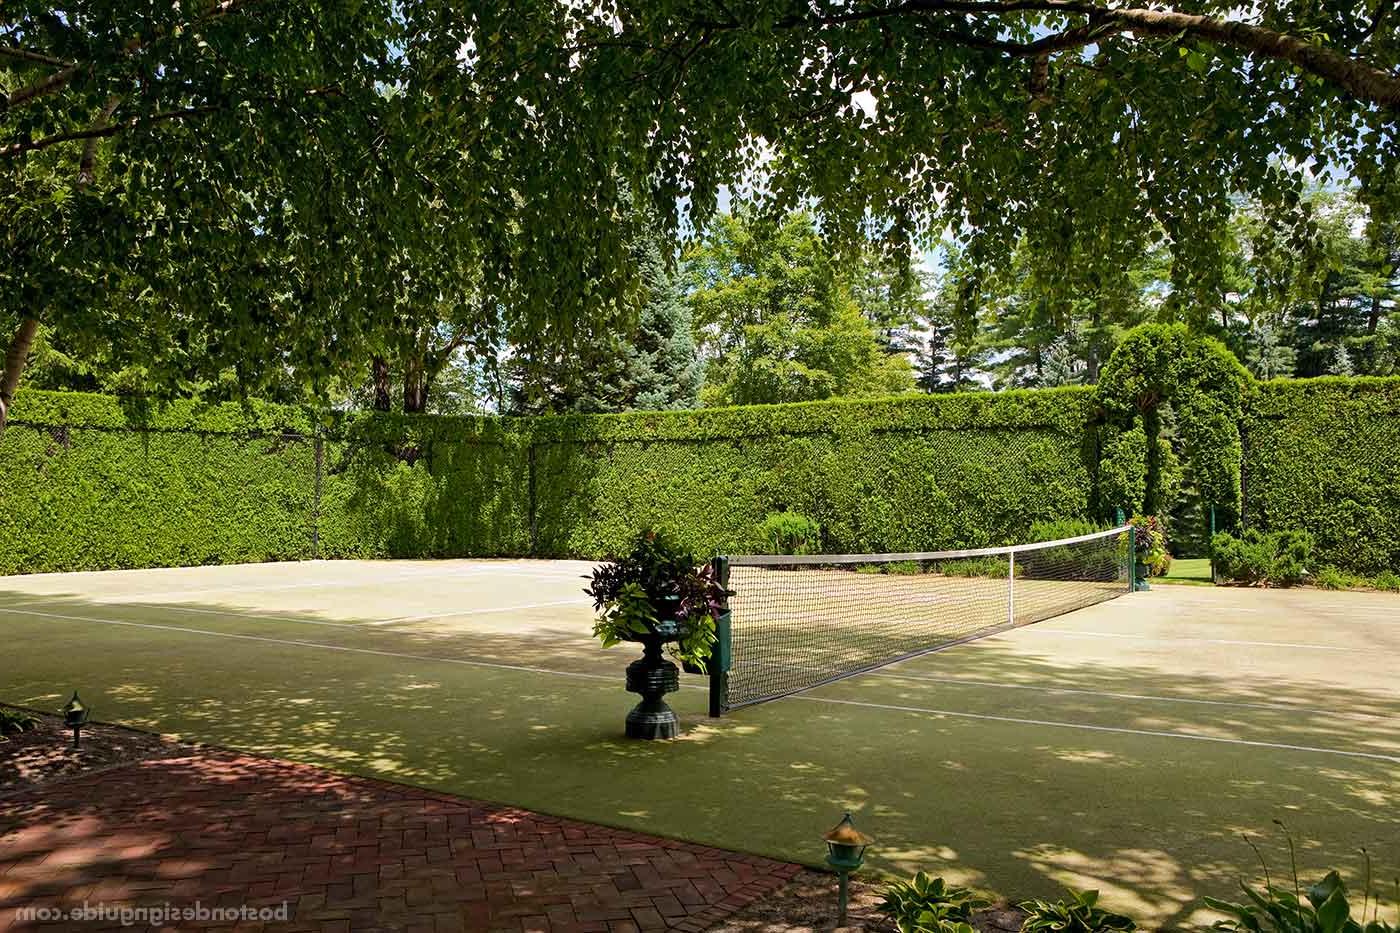 Grass tennis court designed by Sudbury Design Group